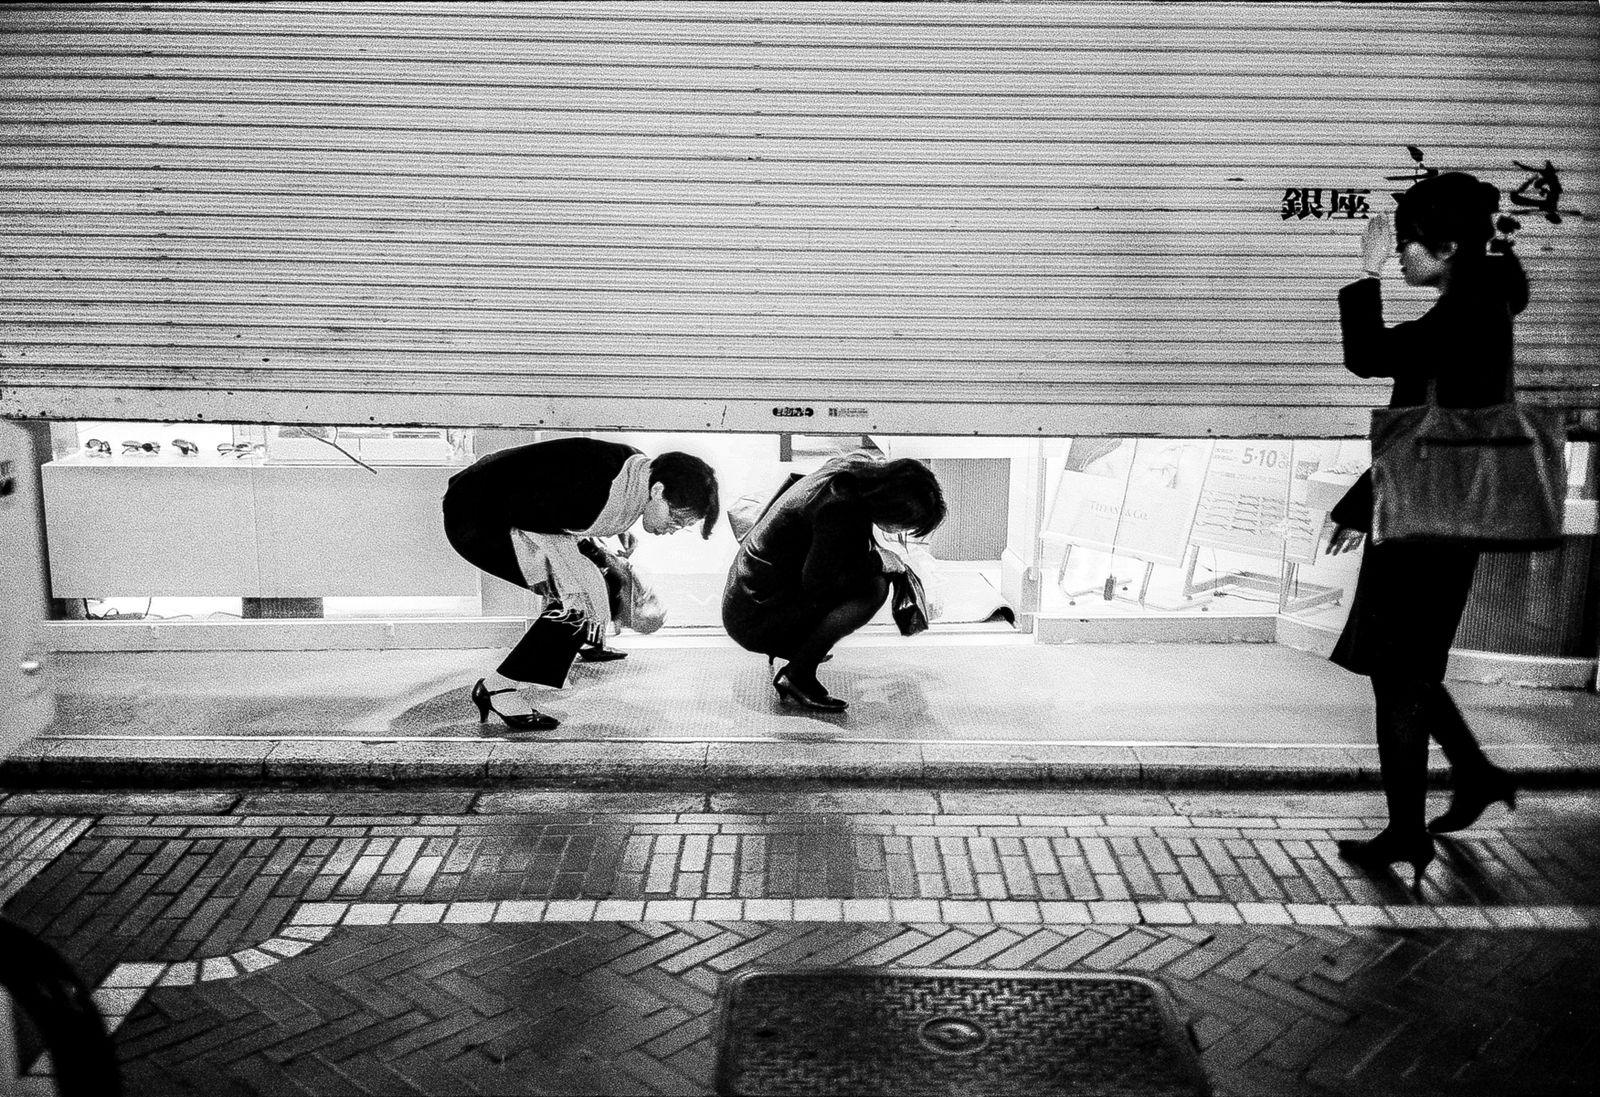 © Paweł Jaśkiewicz - Image from the TOKYO photography project